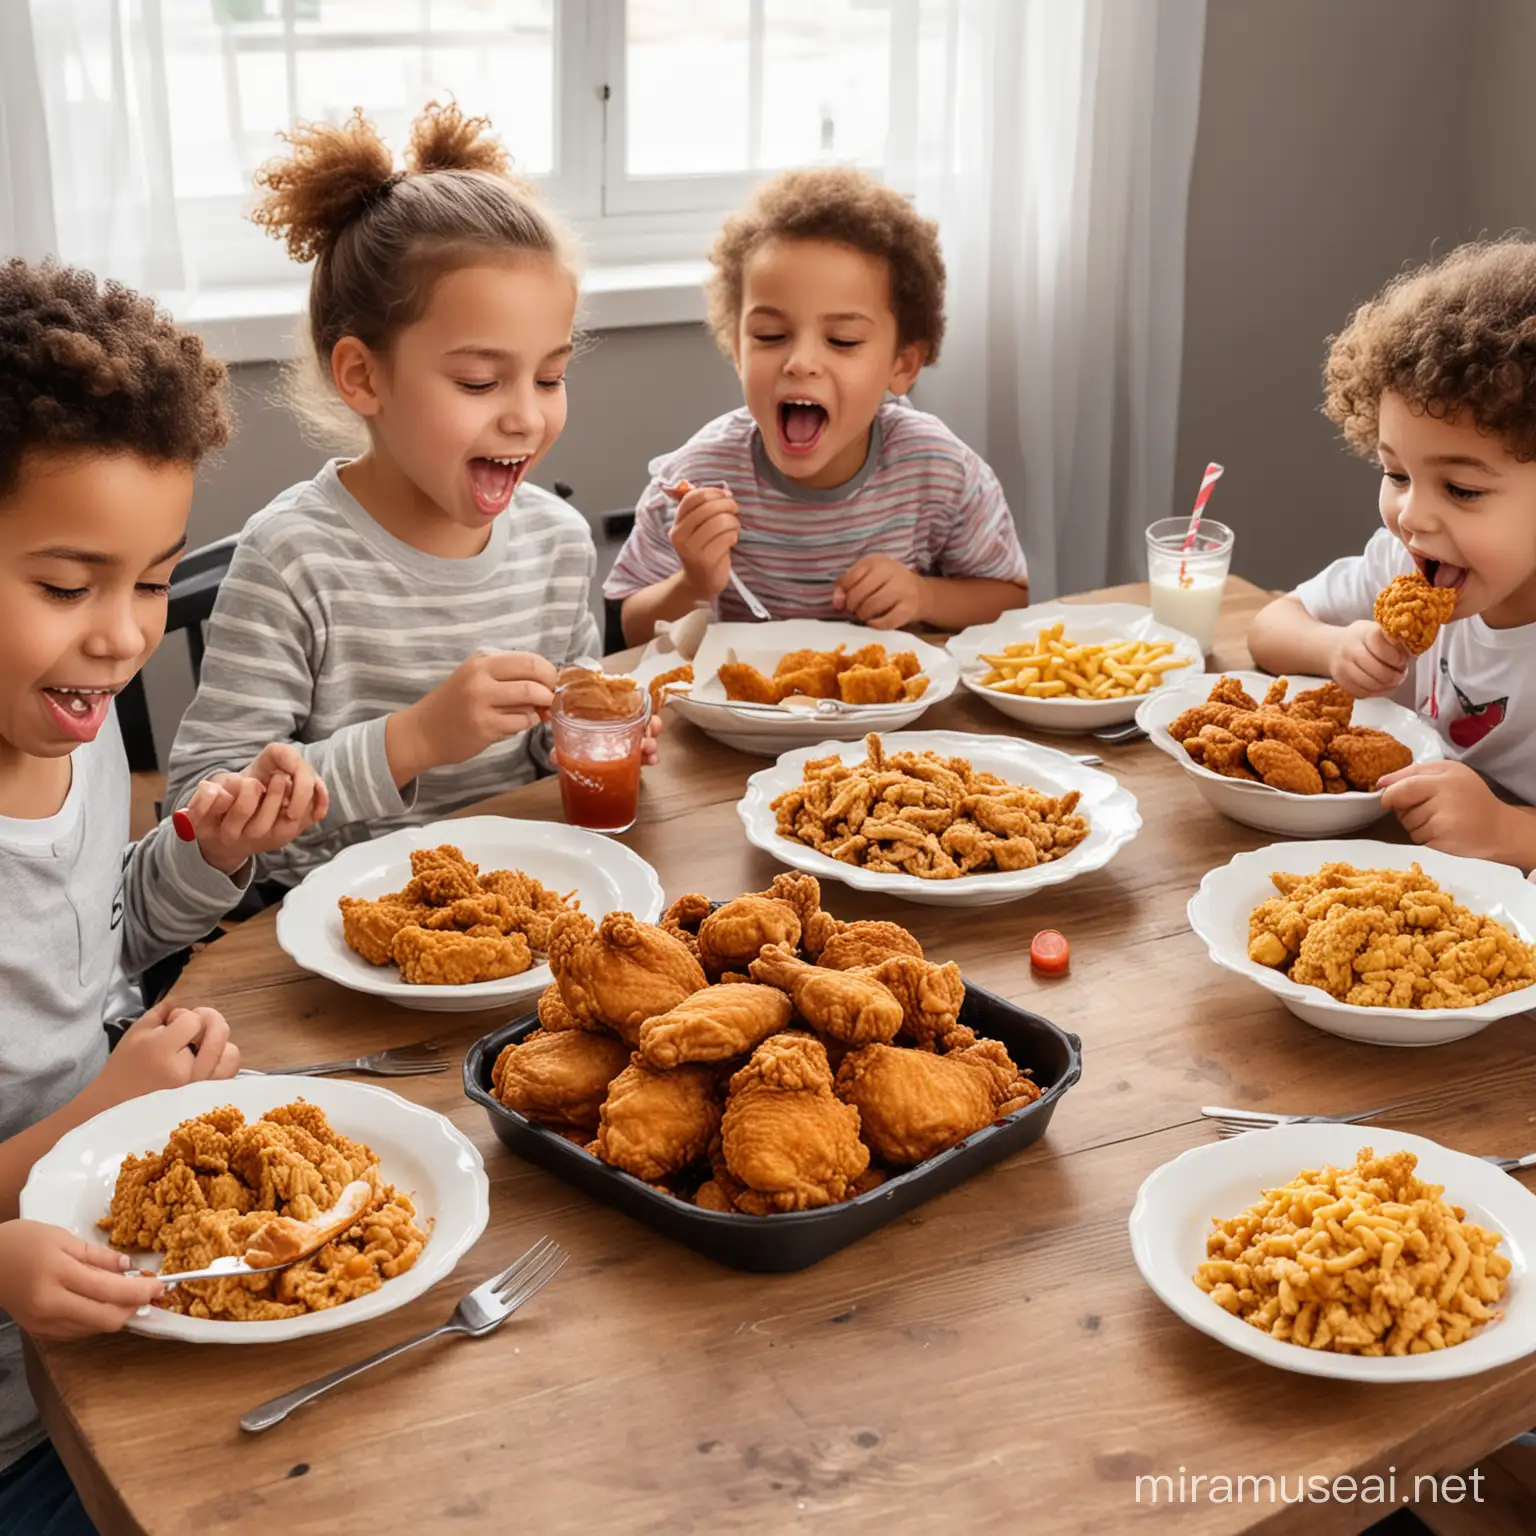 Children Enjoying a Feast of Crispy Fried Chicken Delights